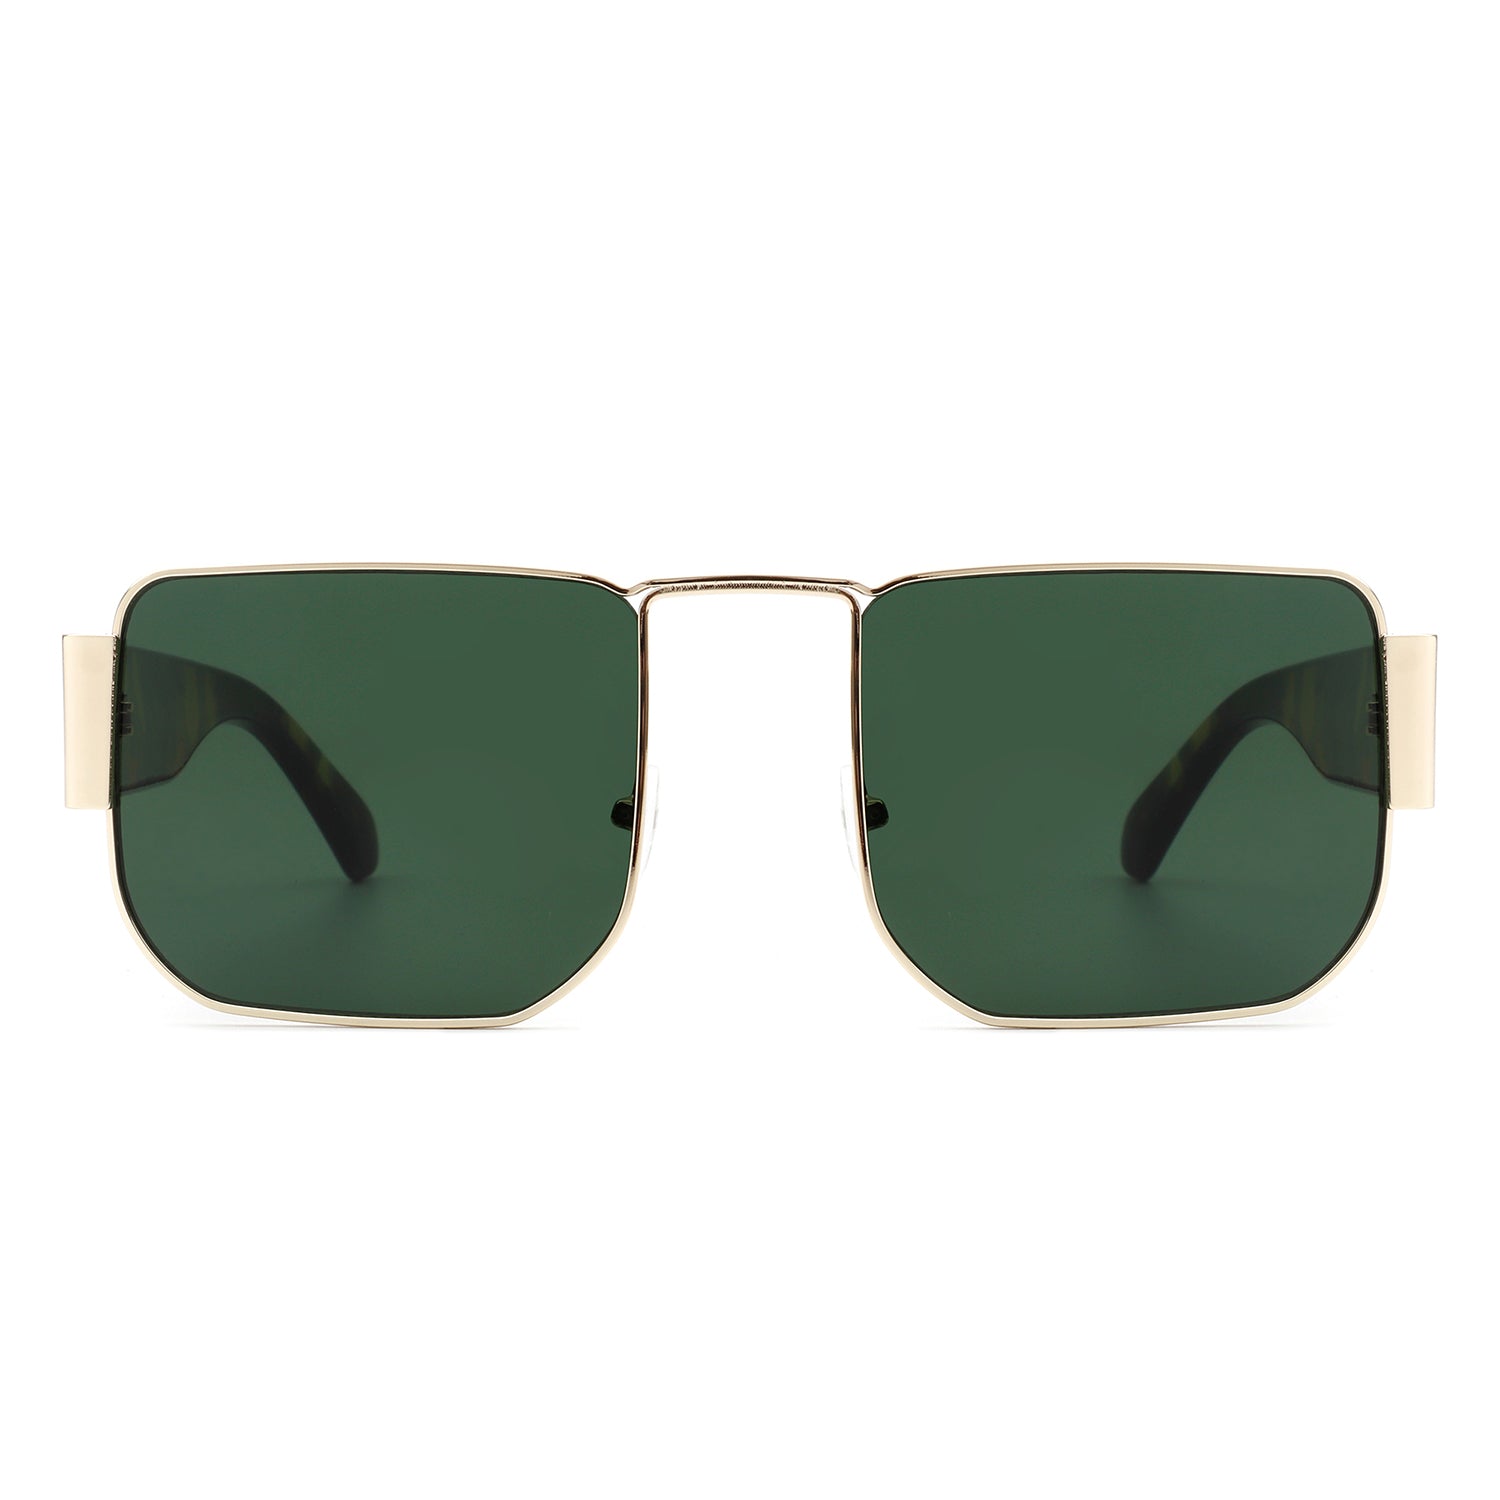 HJ2032 - Square Retro Flat Top Tinted VINTAGE Fashion Sunglasses